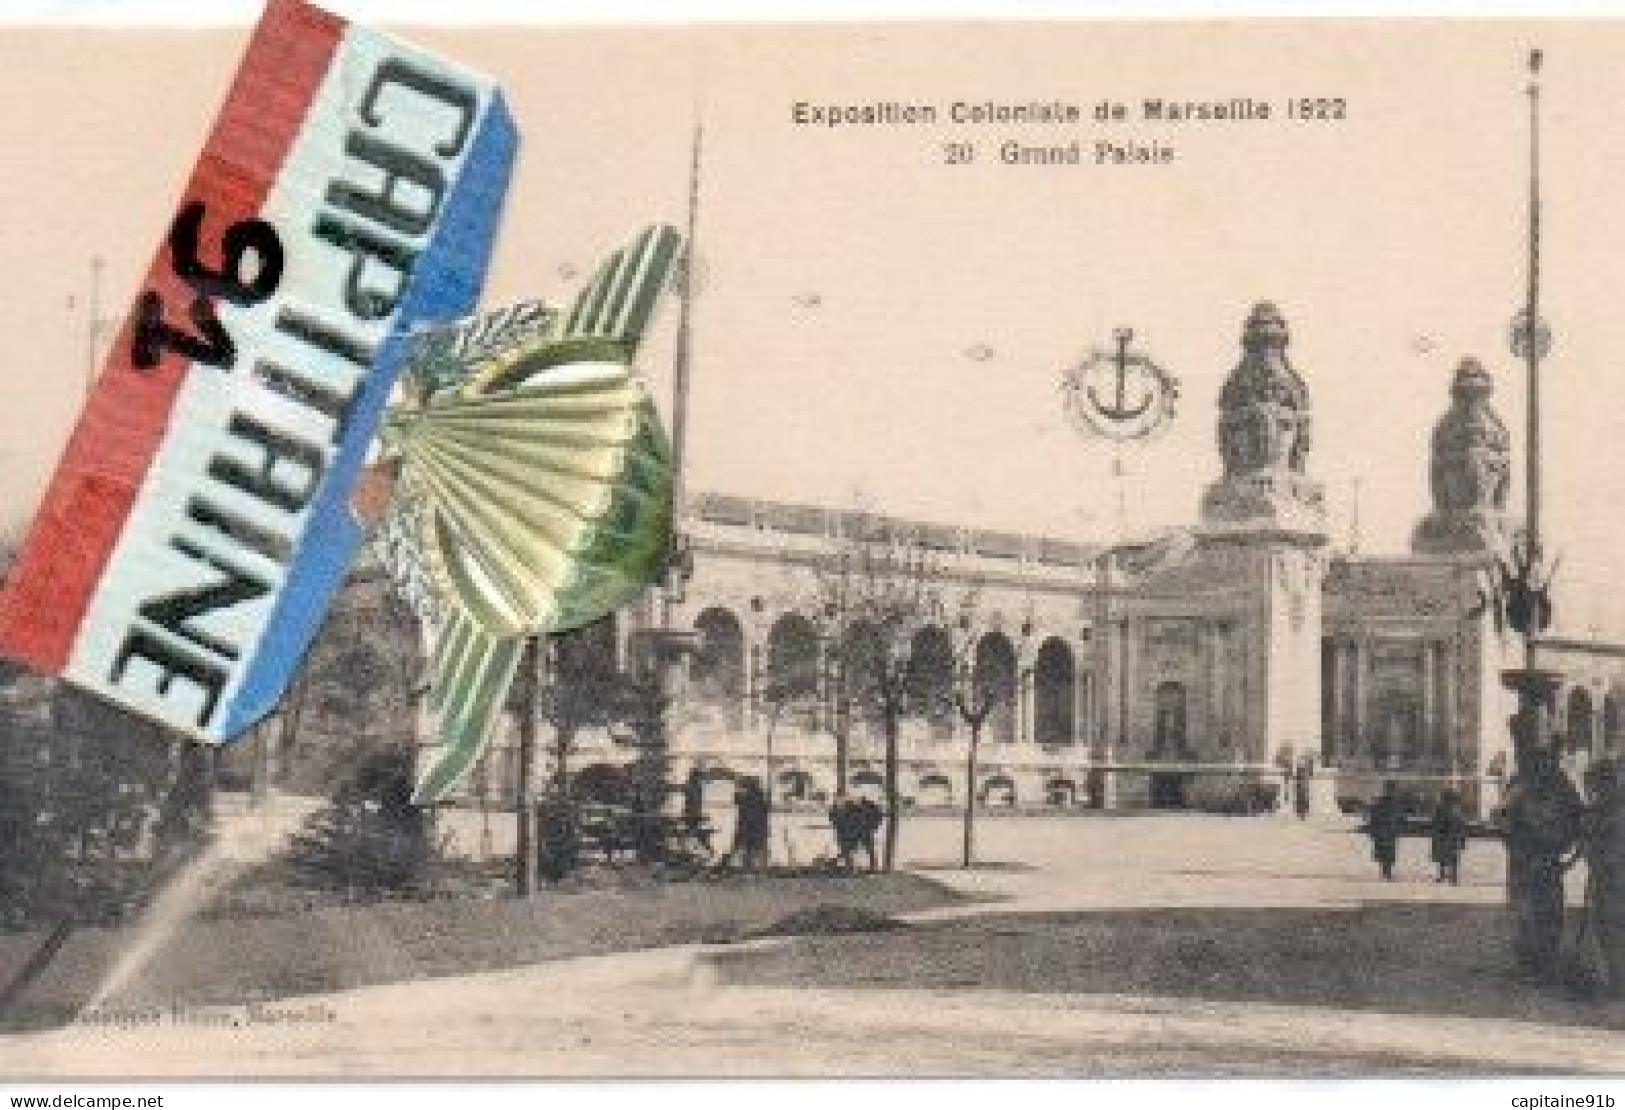 CPA EXPOSITION COLONIALE DE MARSELLE 1922 BOUCHES DU RHONE GRAND PALAIS. X X - Exposiciones Coloniales 1906 - 1922